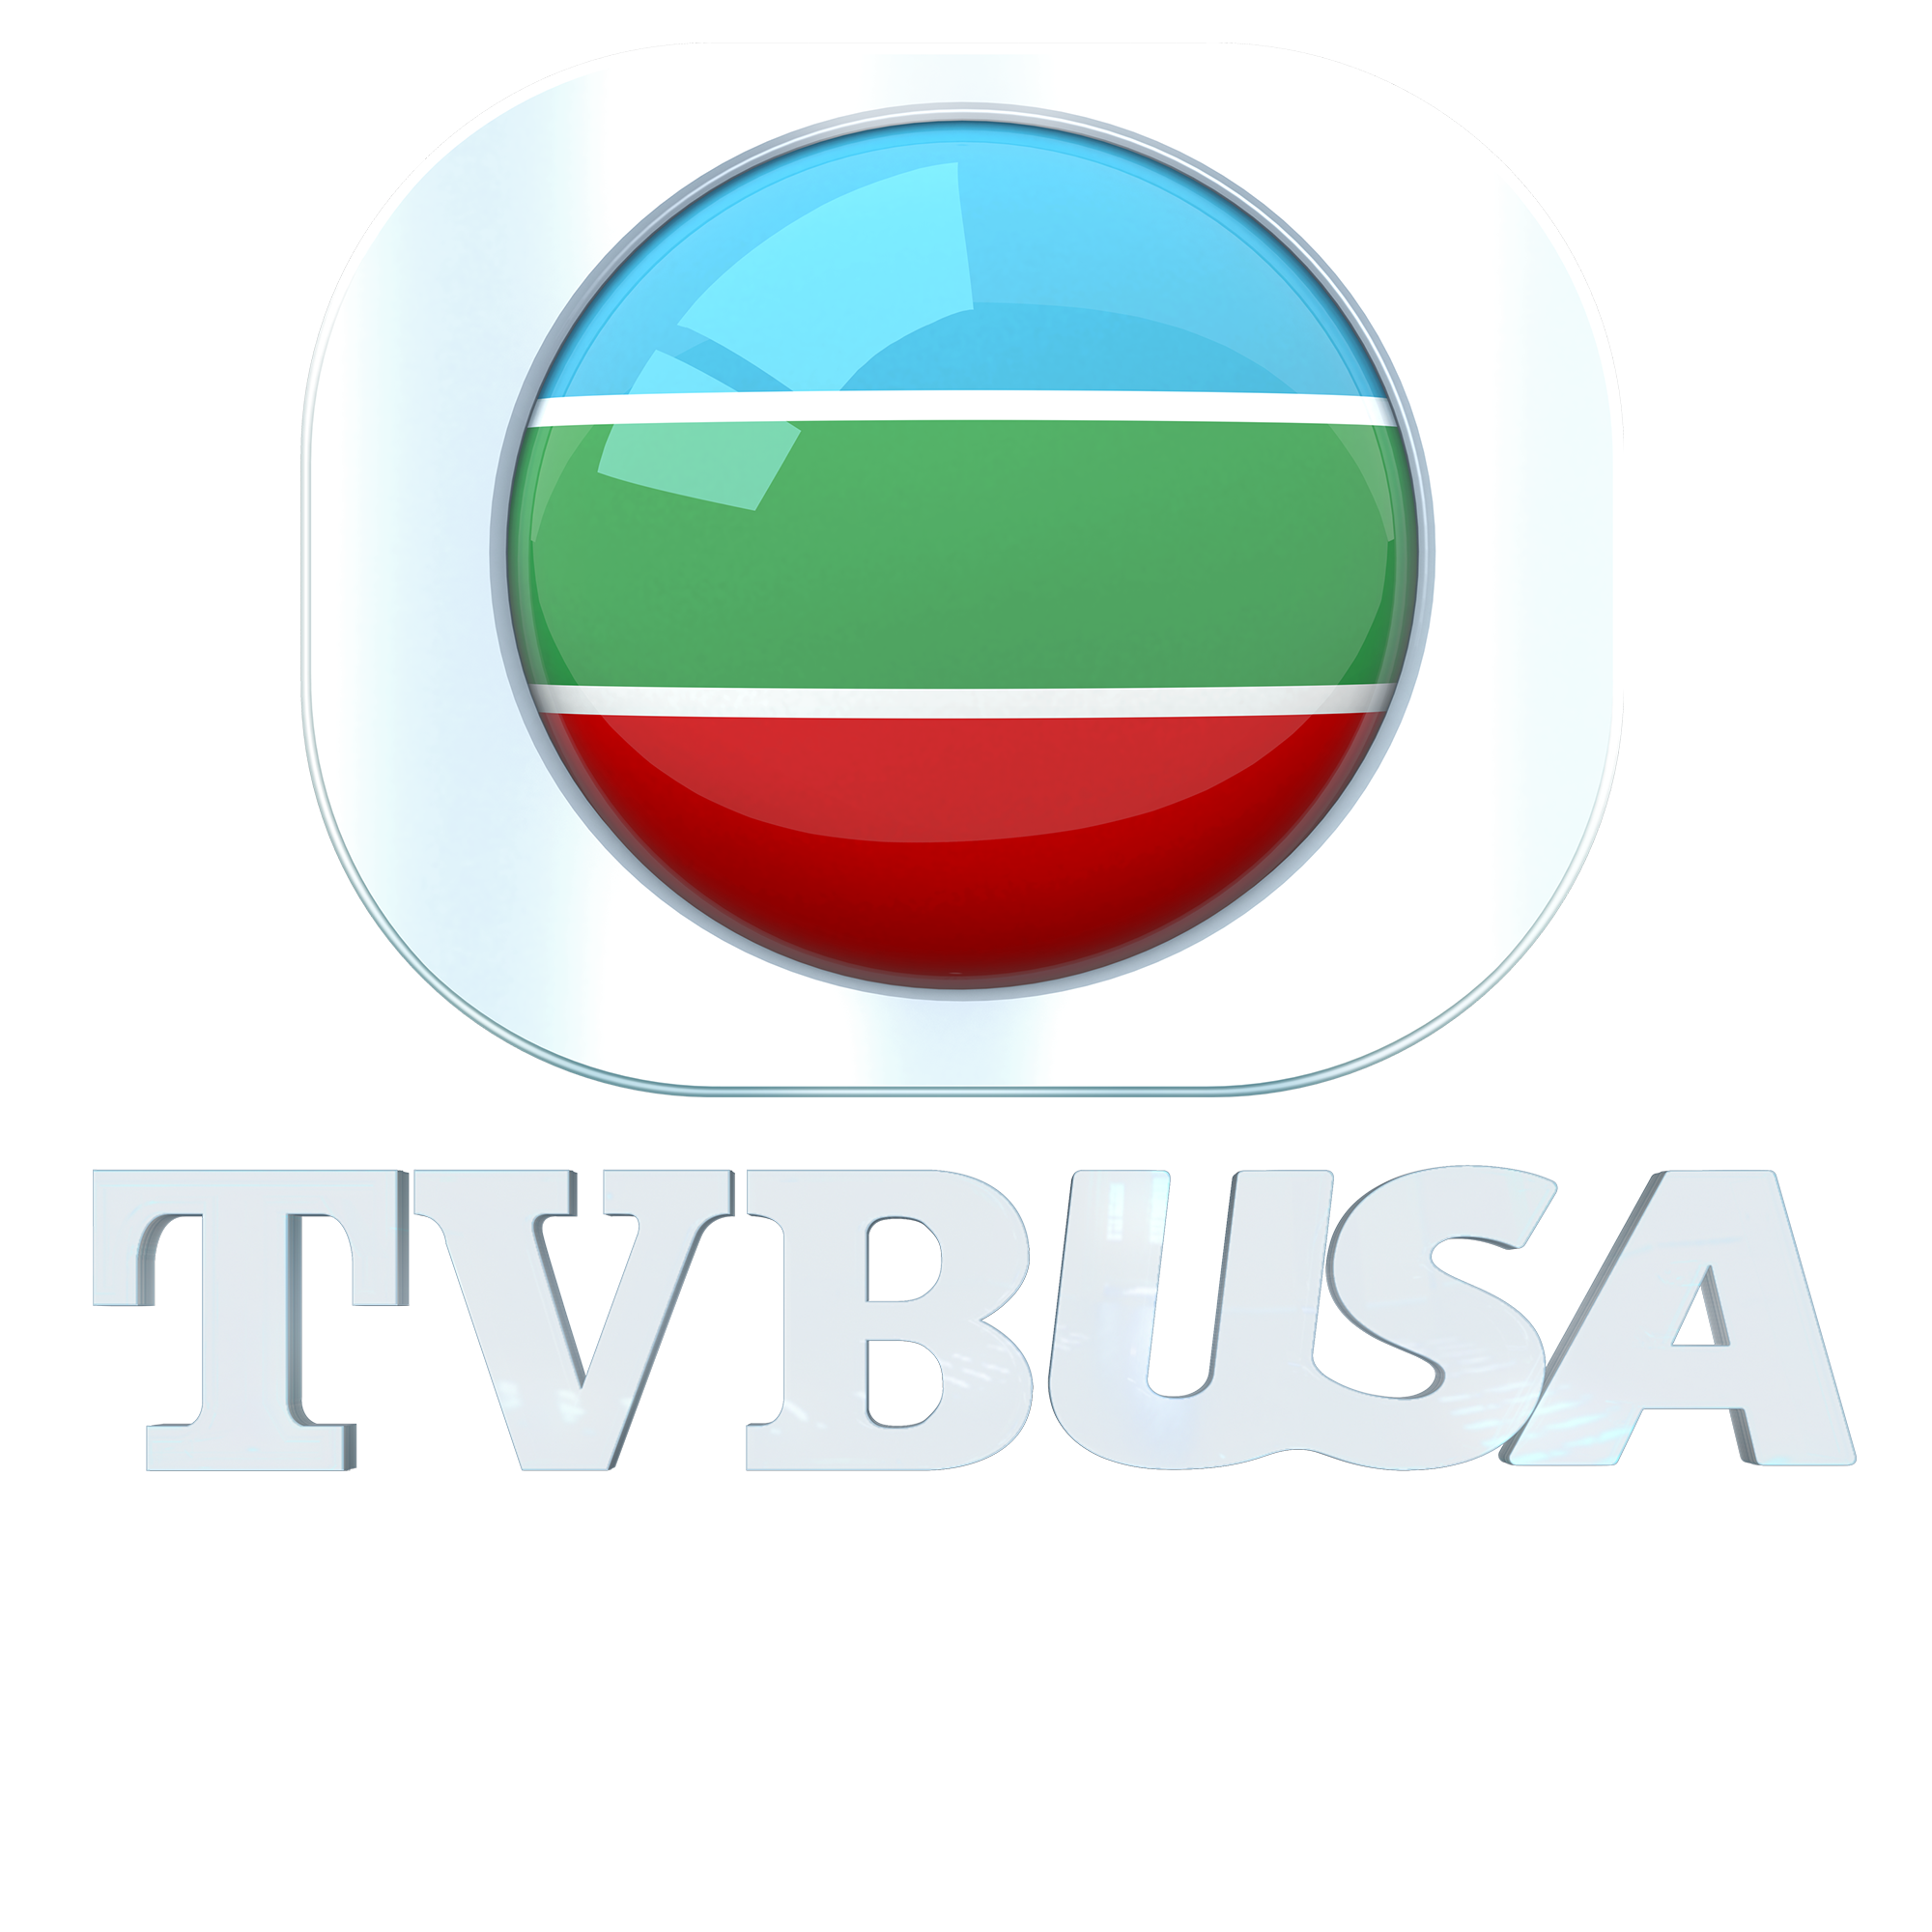 TVBUSA Logo 2019 (Vertical) 3D.png